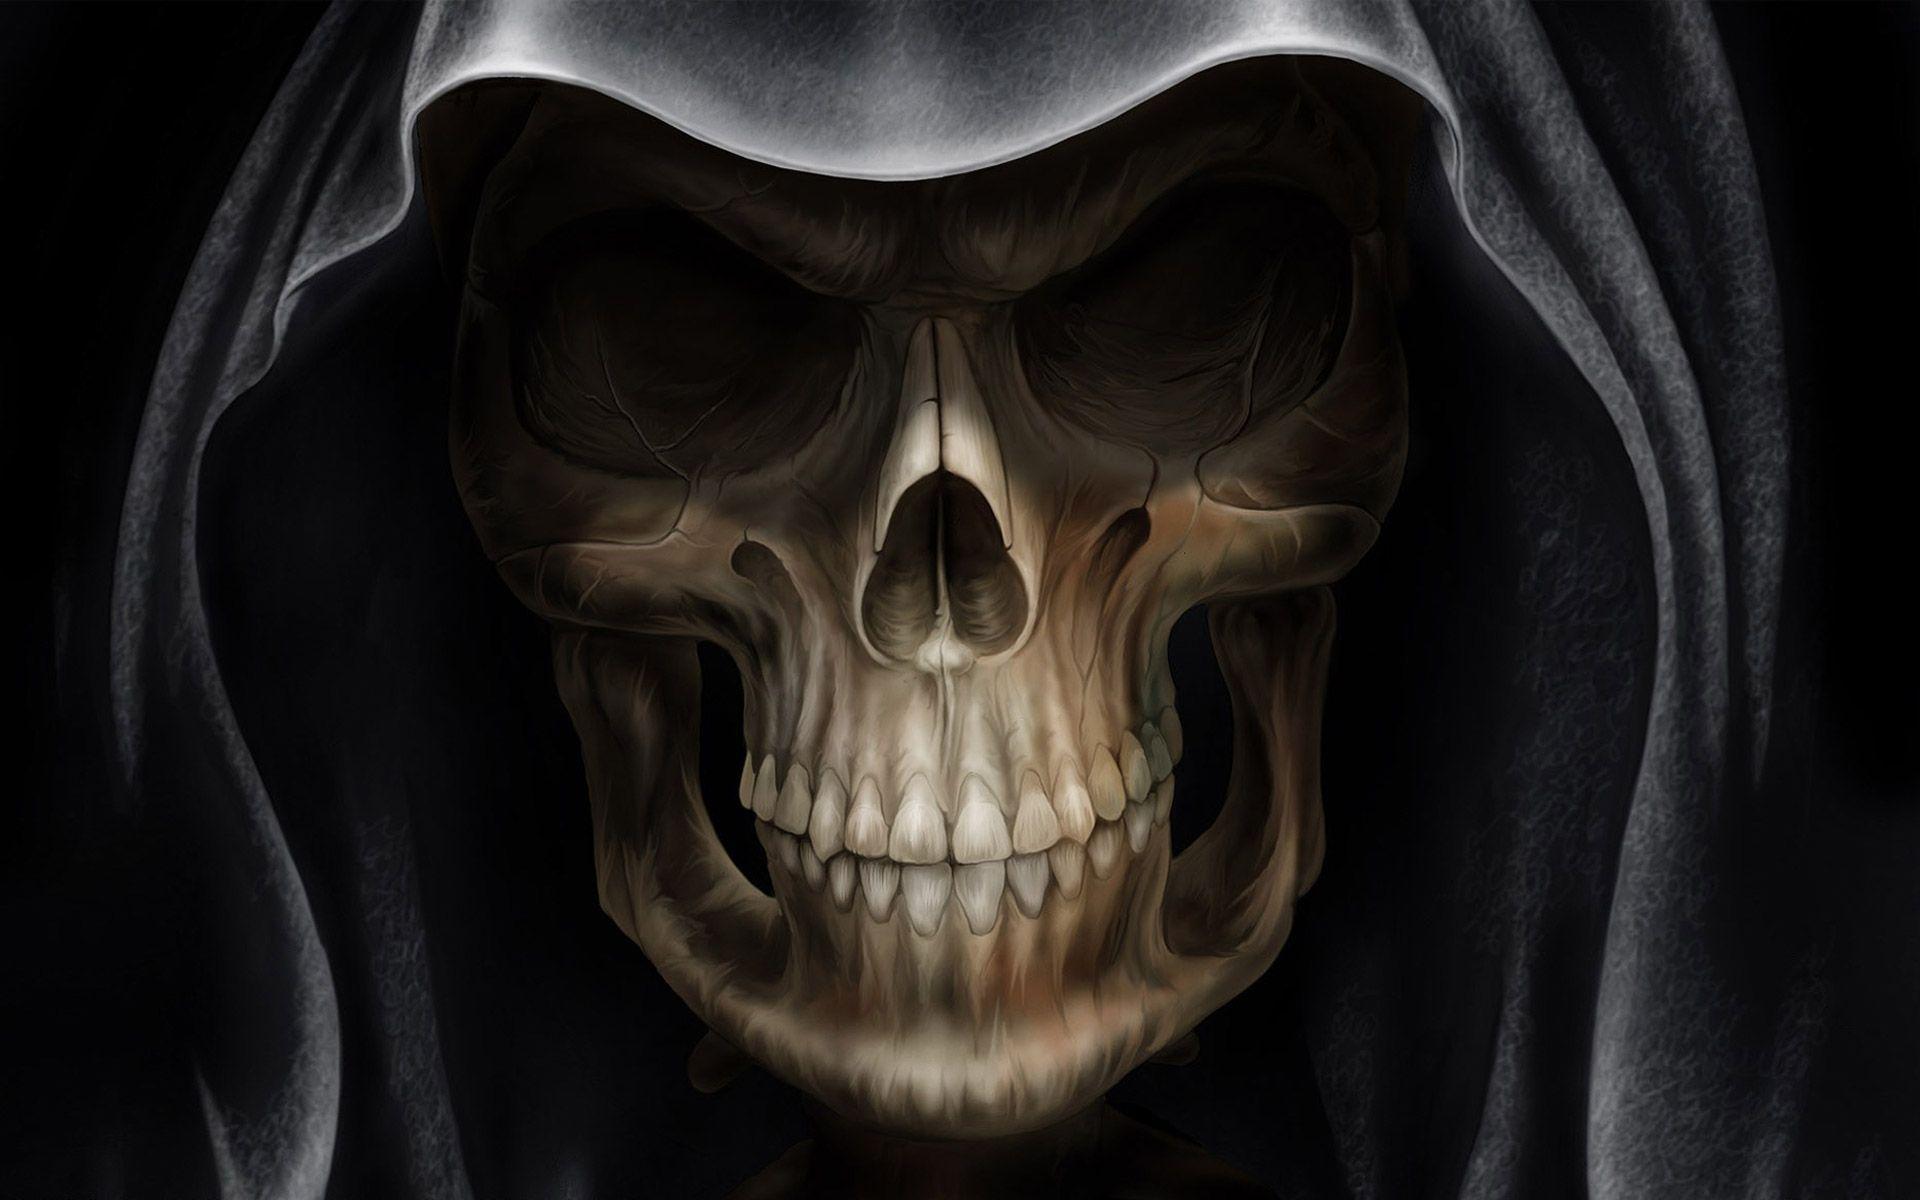  4K Skull Wallpapers HD  Apps on Google Play